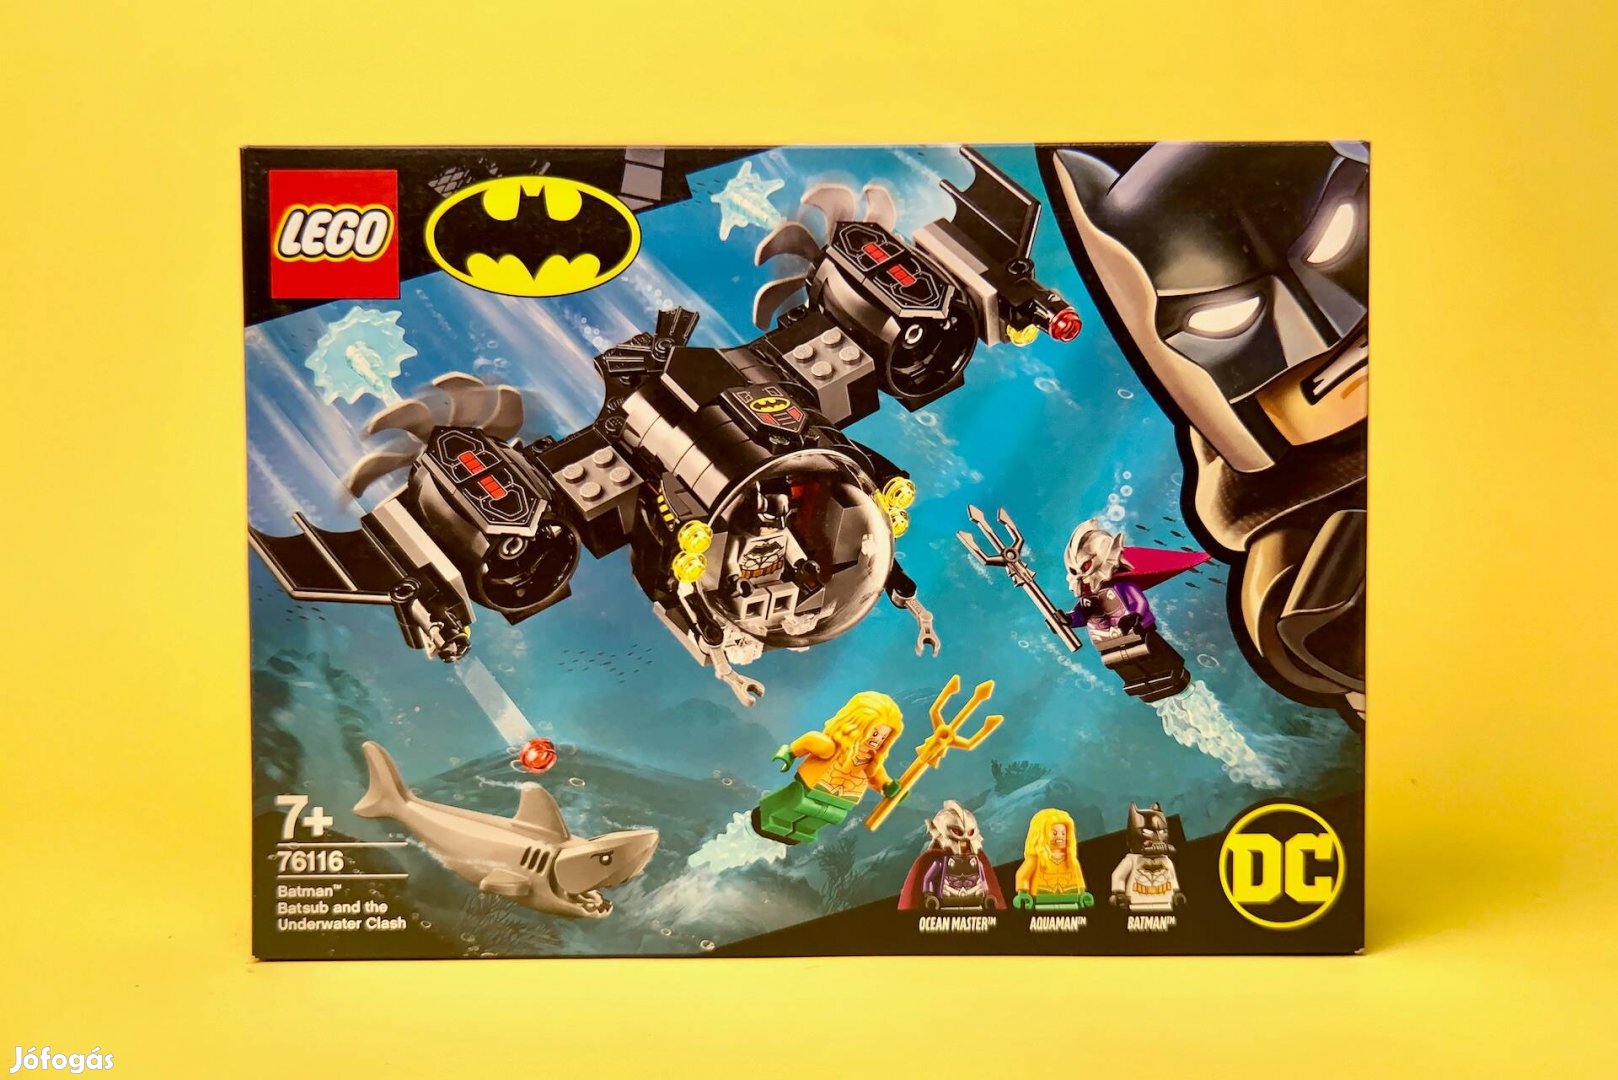 LEGO DC 76116 Batman Batsub and the Underwater Clash, Uj, Bontatlan